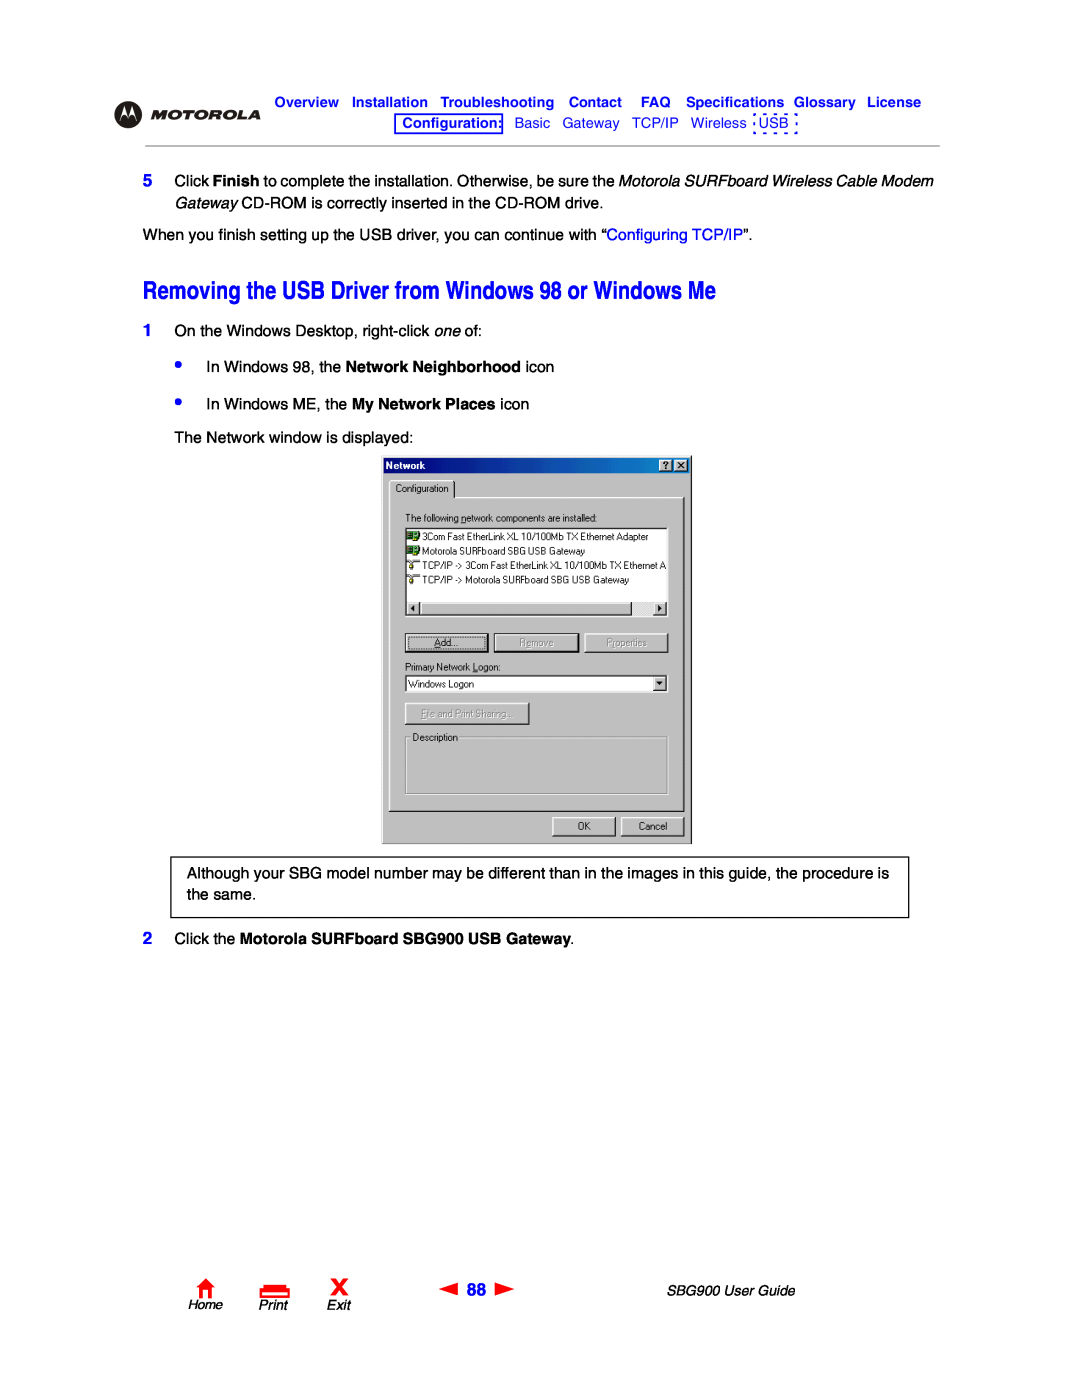 Motorola manual Removing the USB Driver from Windows 98 or Windows Me, Click the Motorola SURFboard SBG900 USB Gateway 